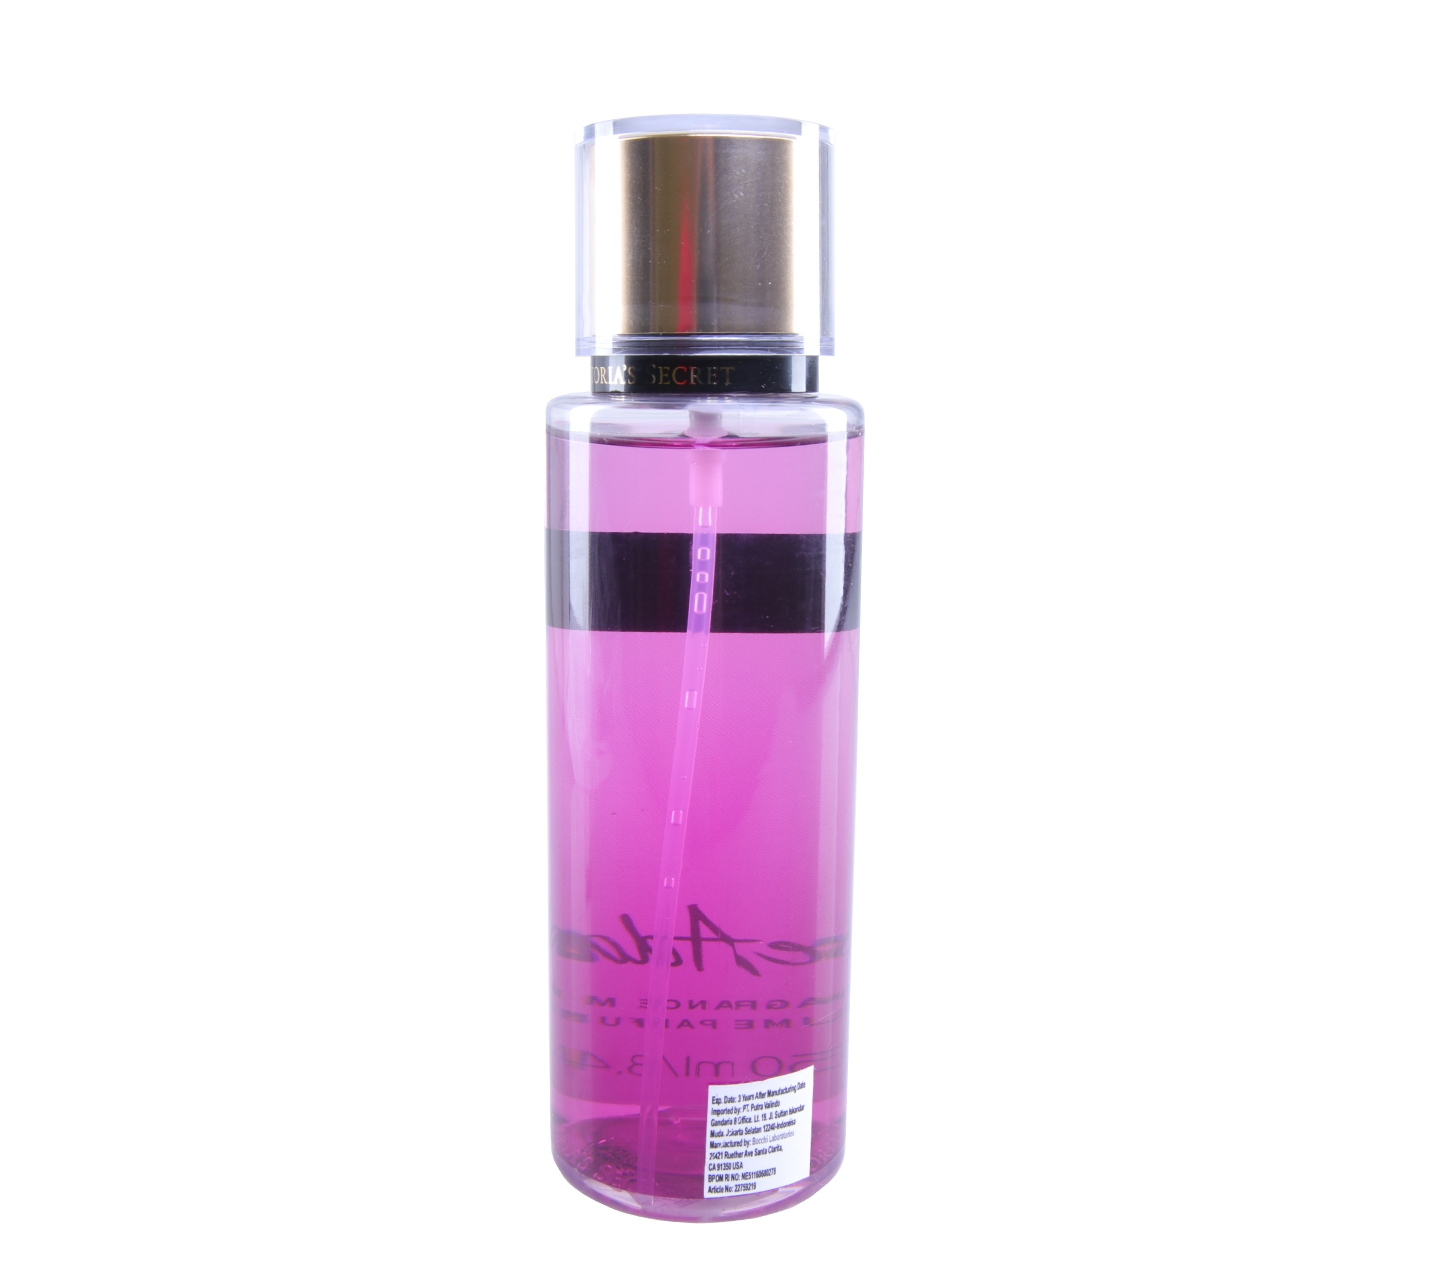 Victoria's Secret Love Addict Fragrance